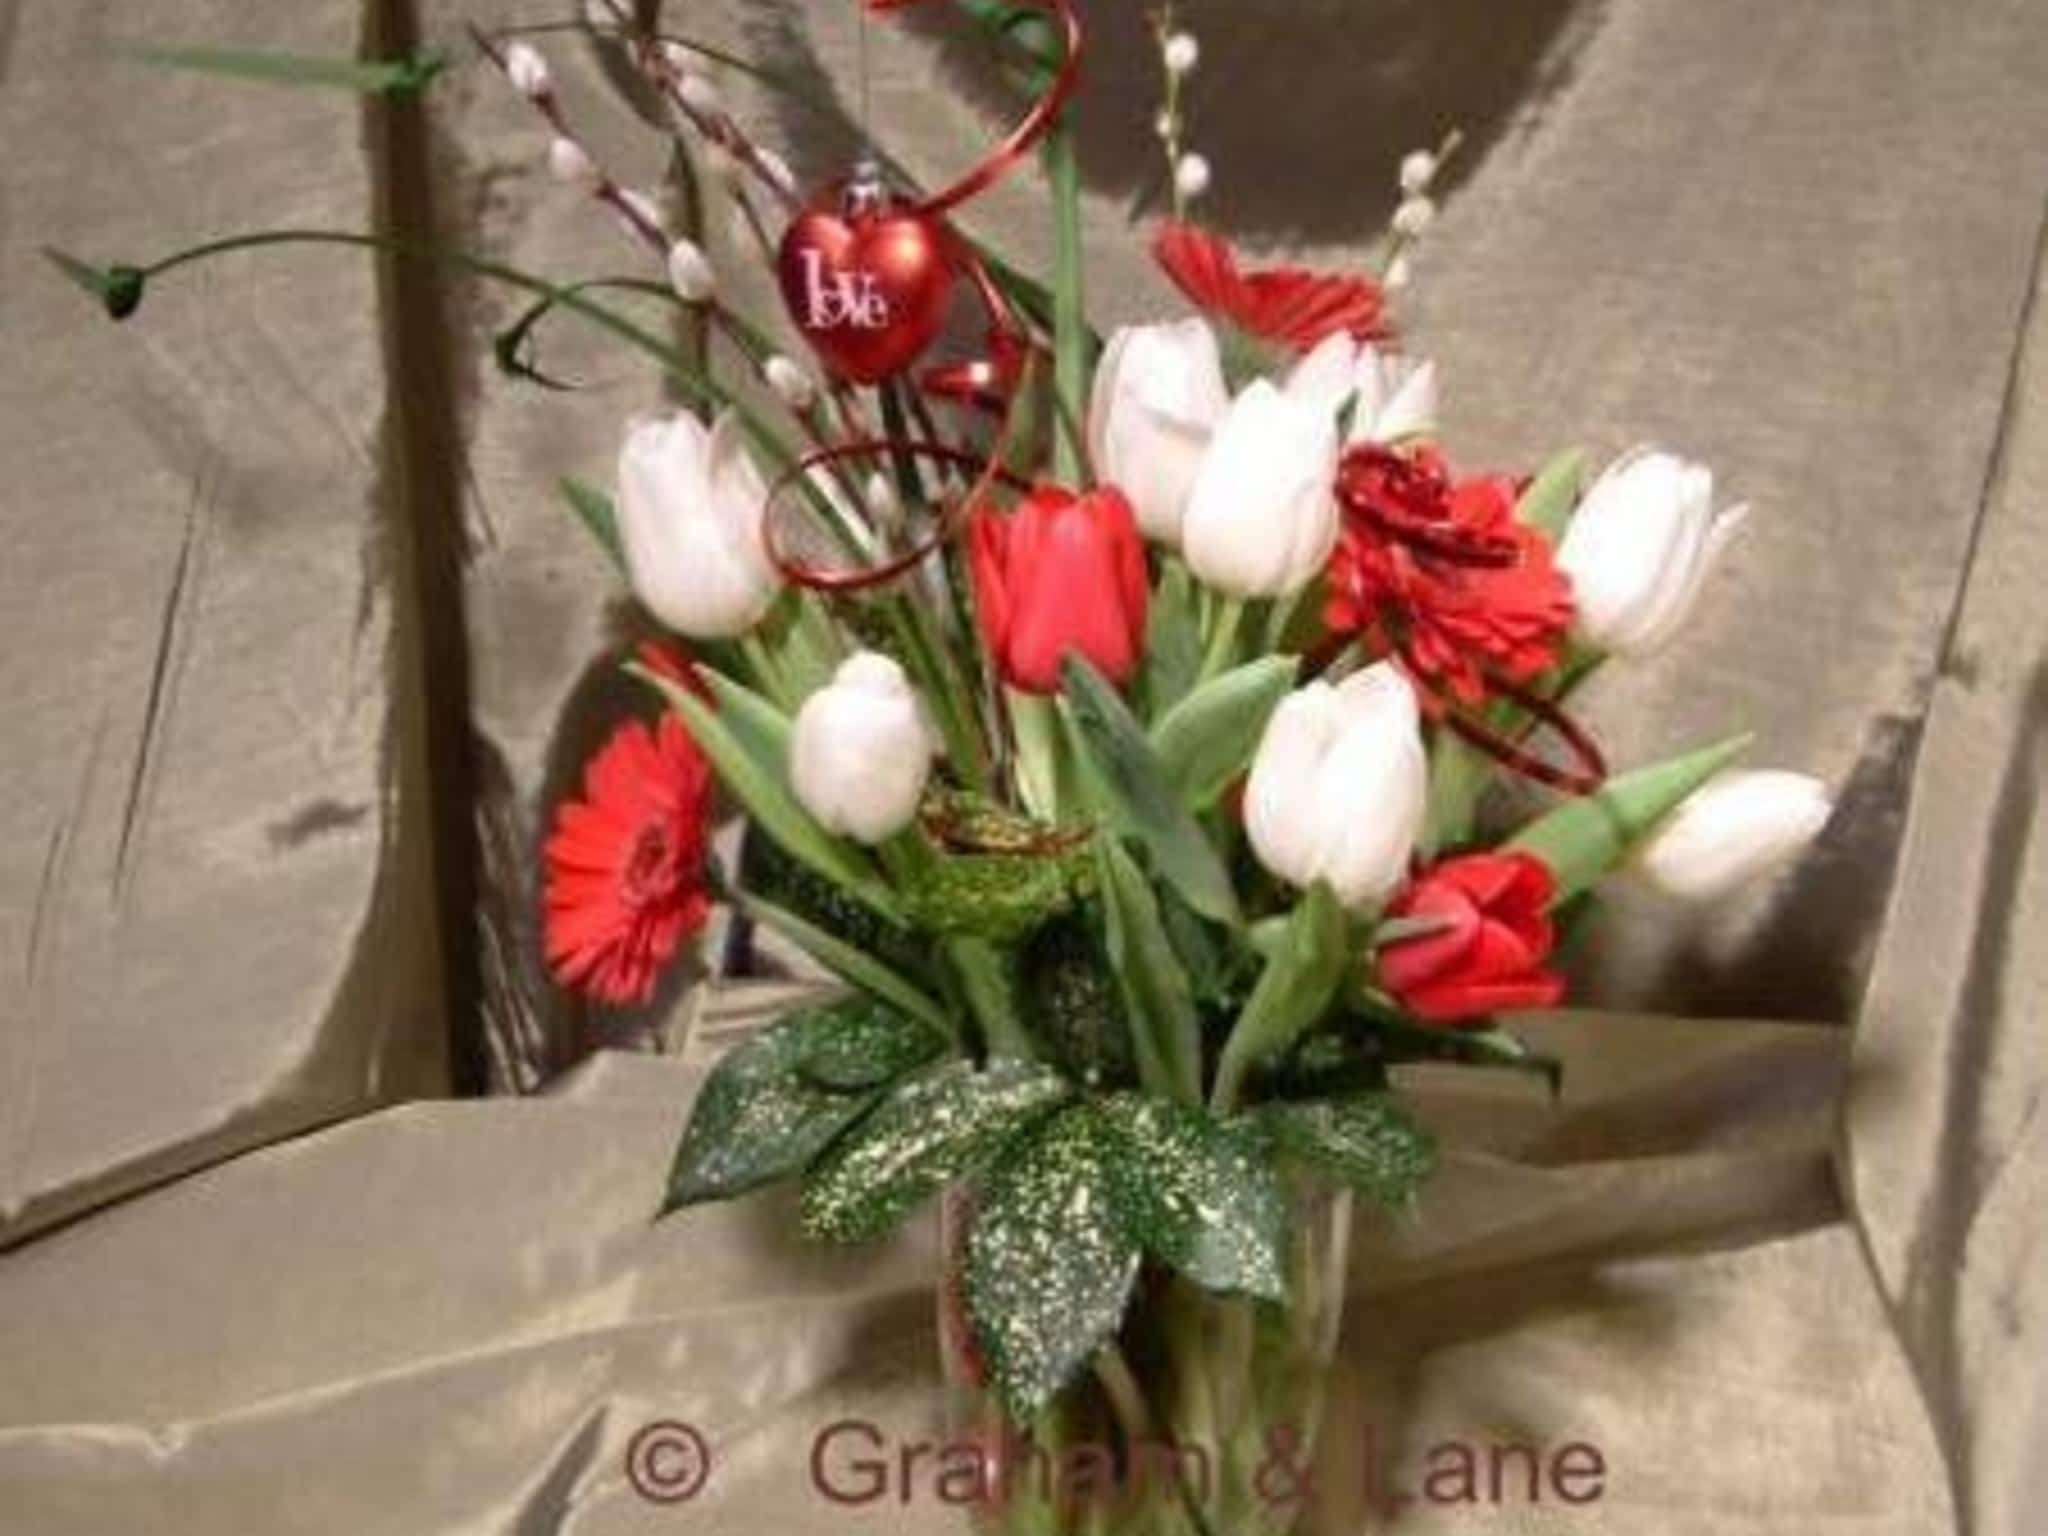 photo Graham & Lane Florists